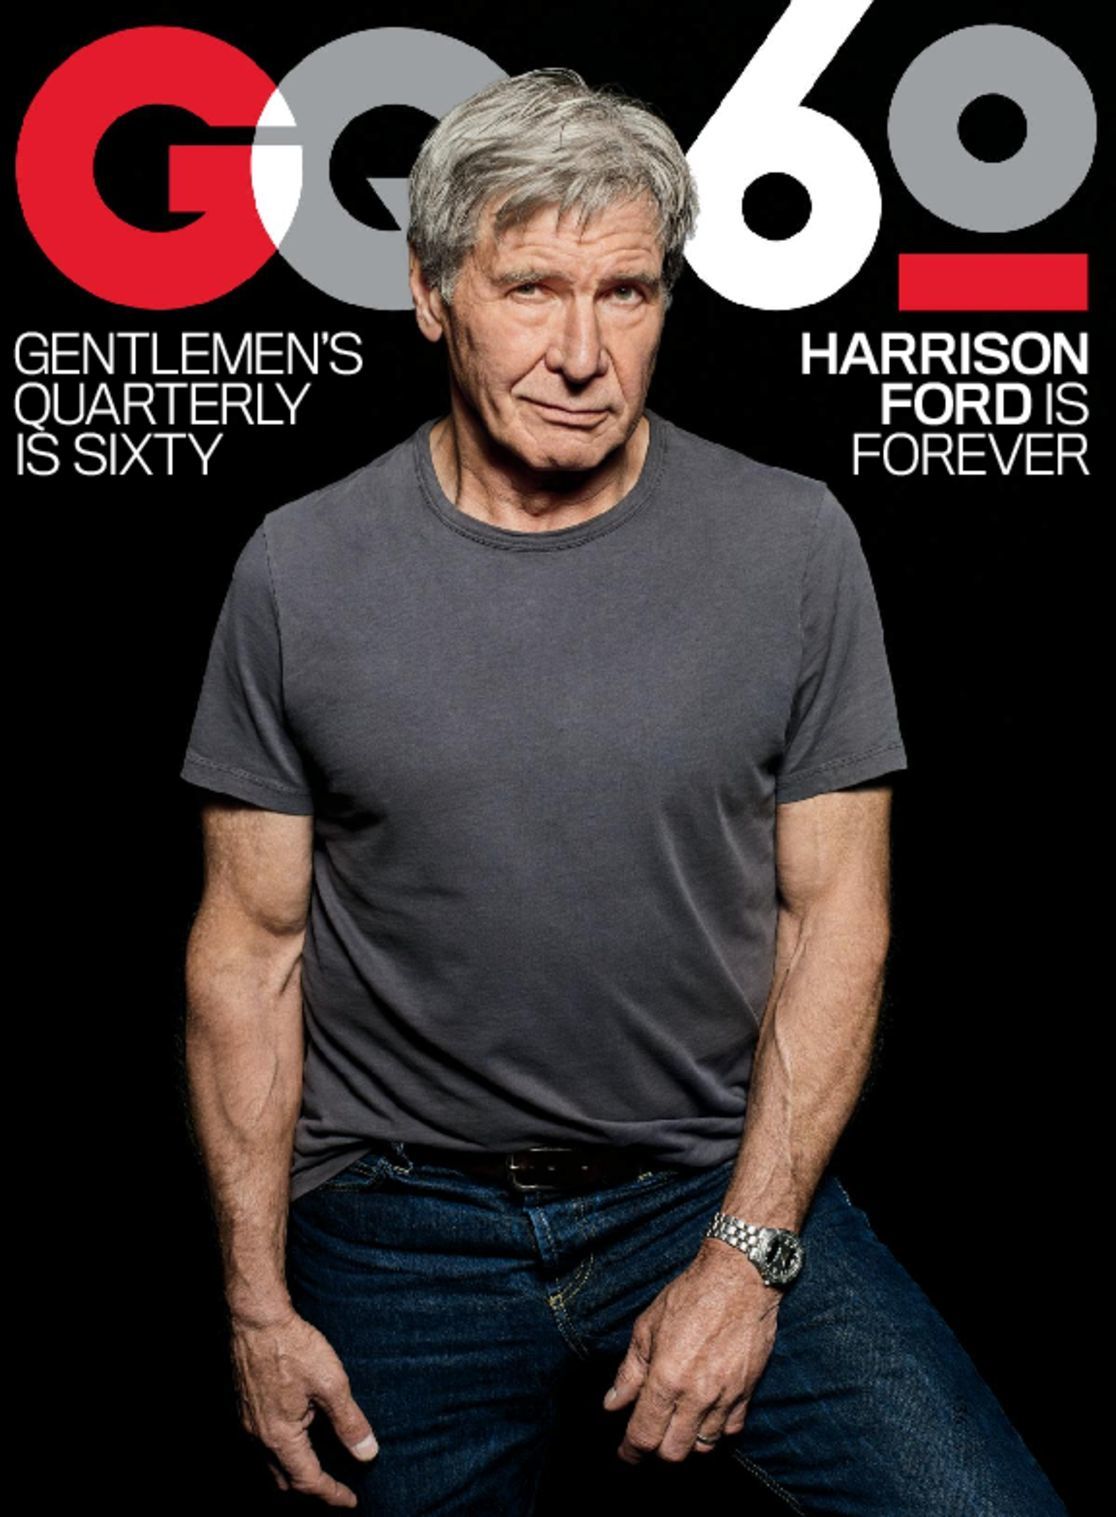 GQ Magazine Raises Price, Sells More Copies | Freeport Press